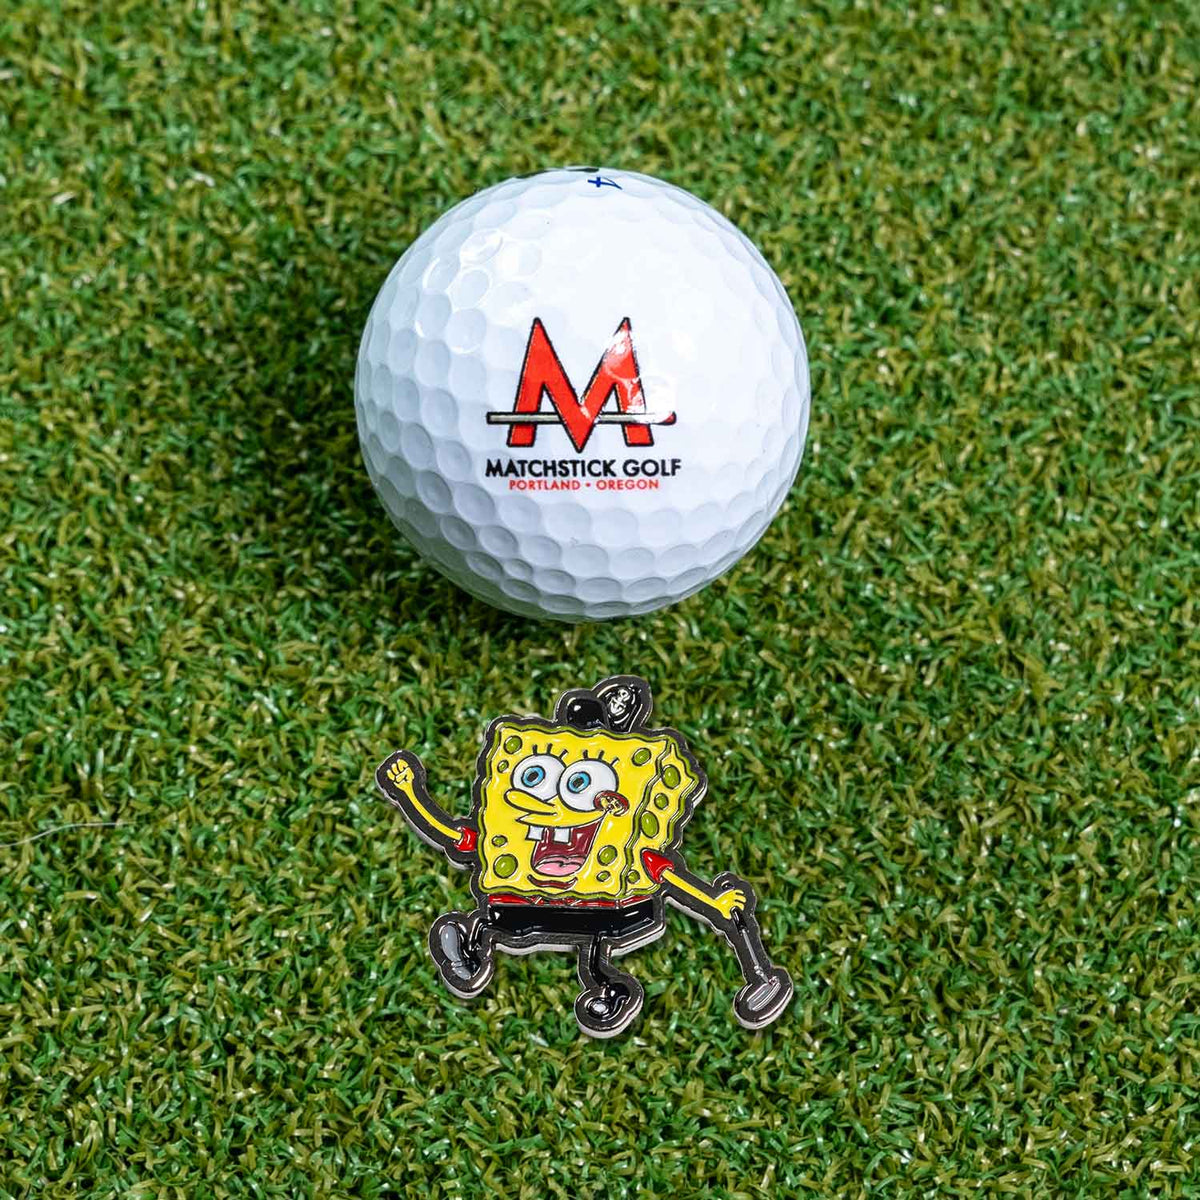 spongebob squarepants tiger woods golf ball marker on grass with ball